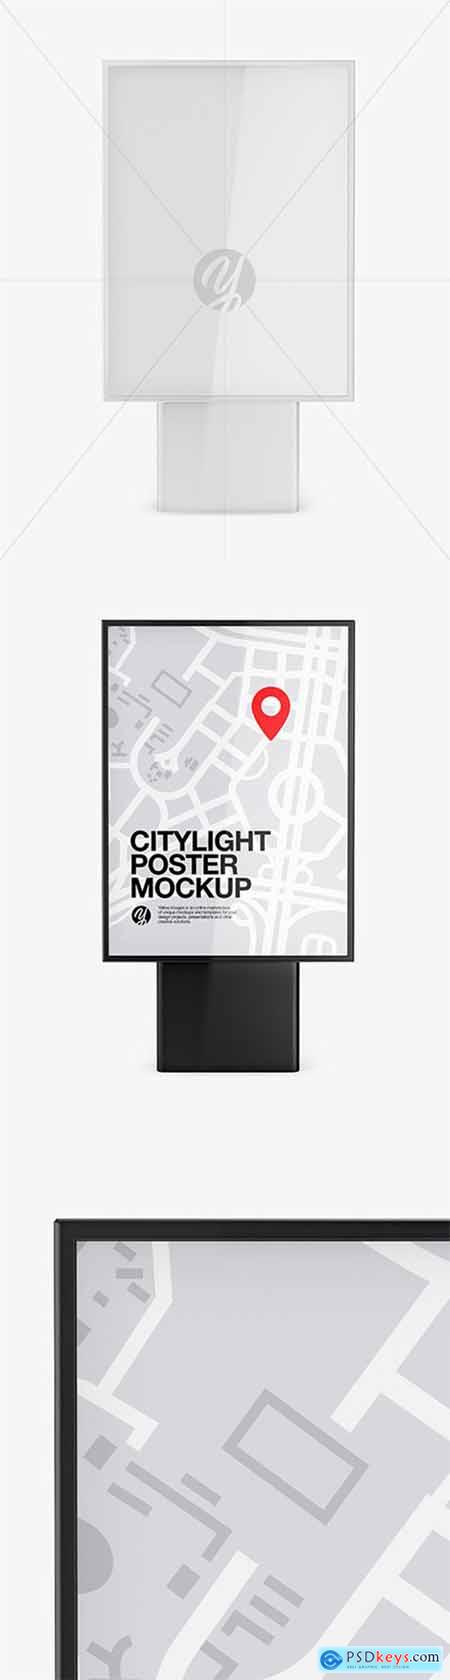 Citylight Poster Mockup 58263